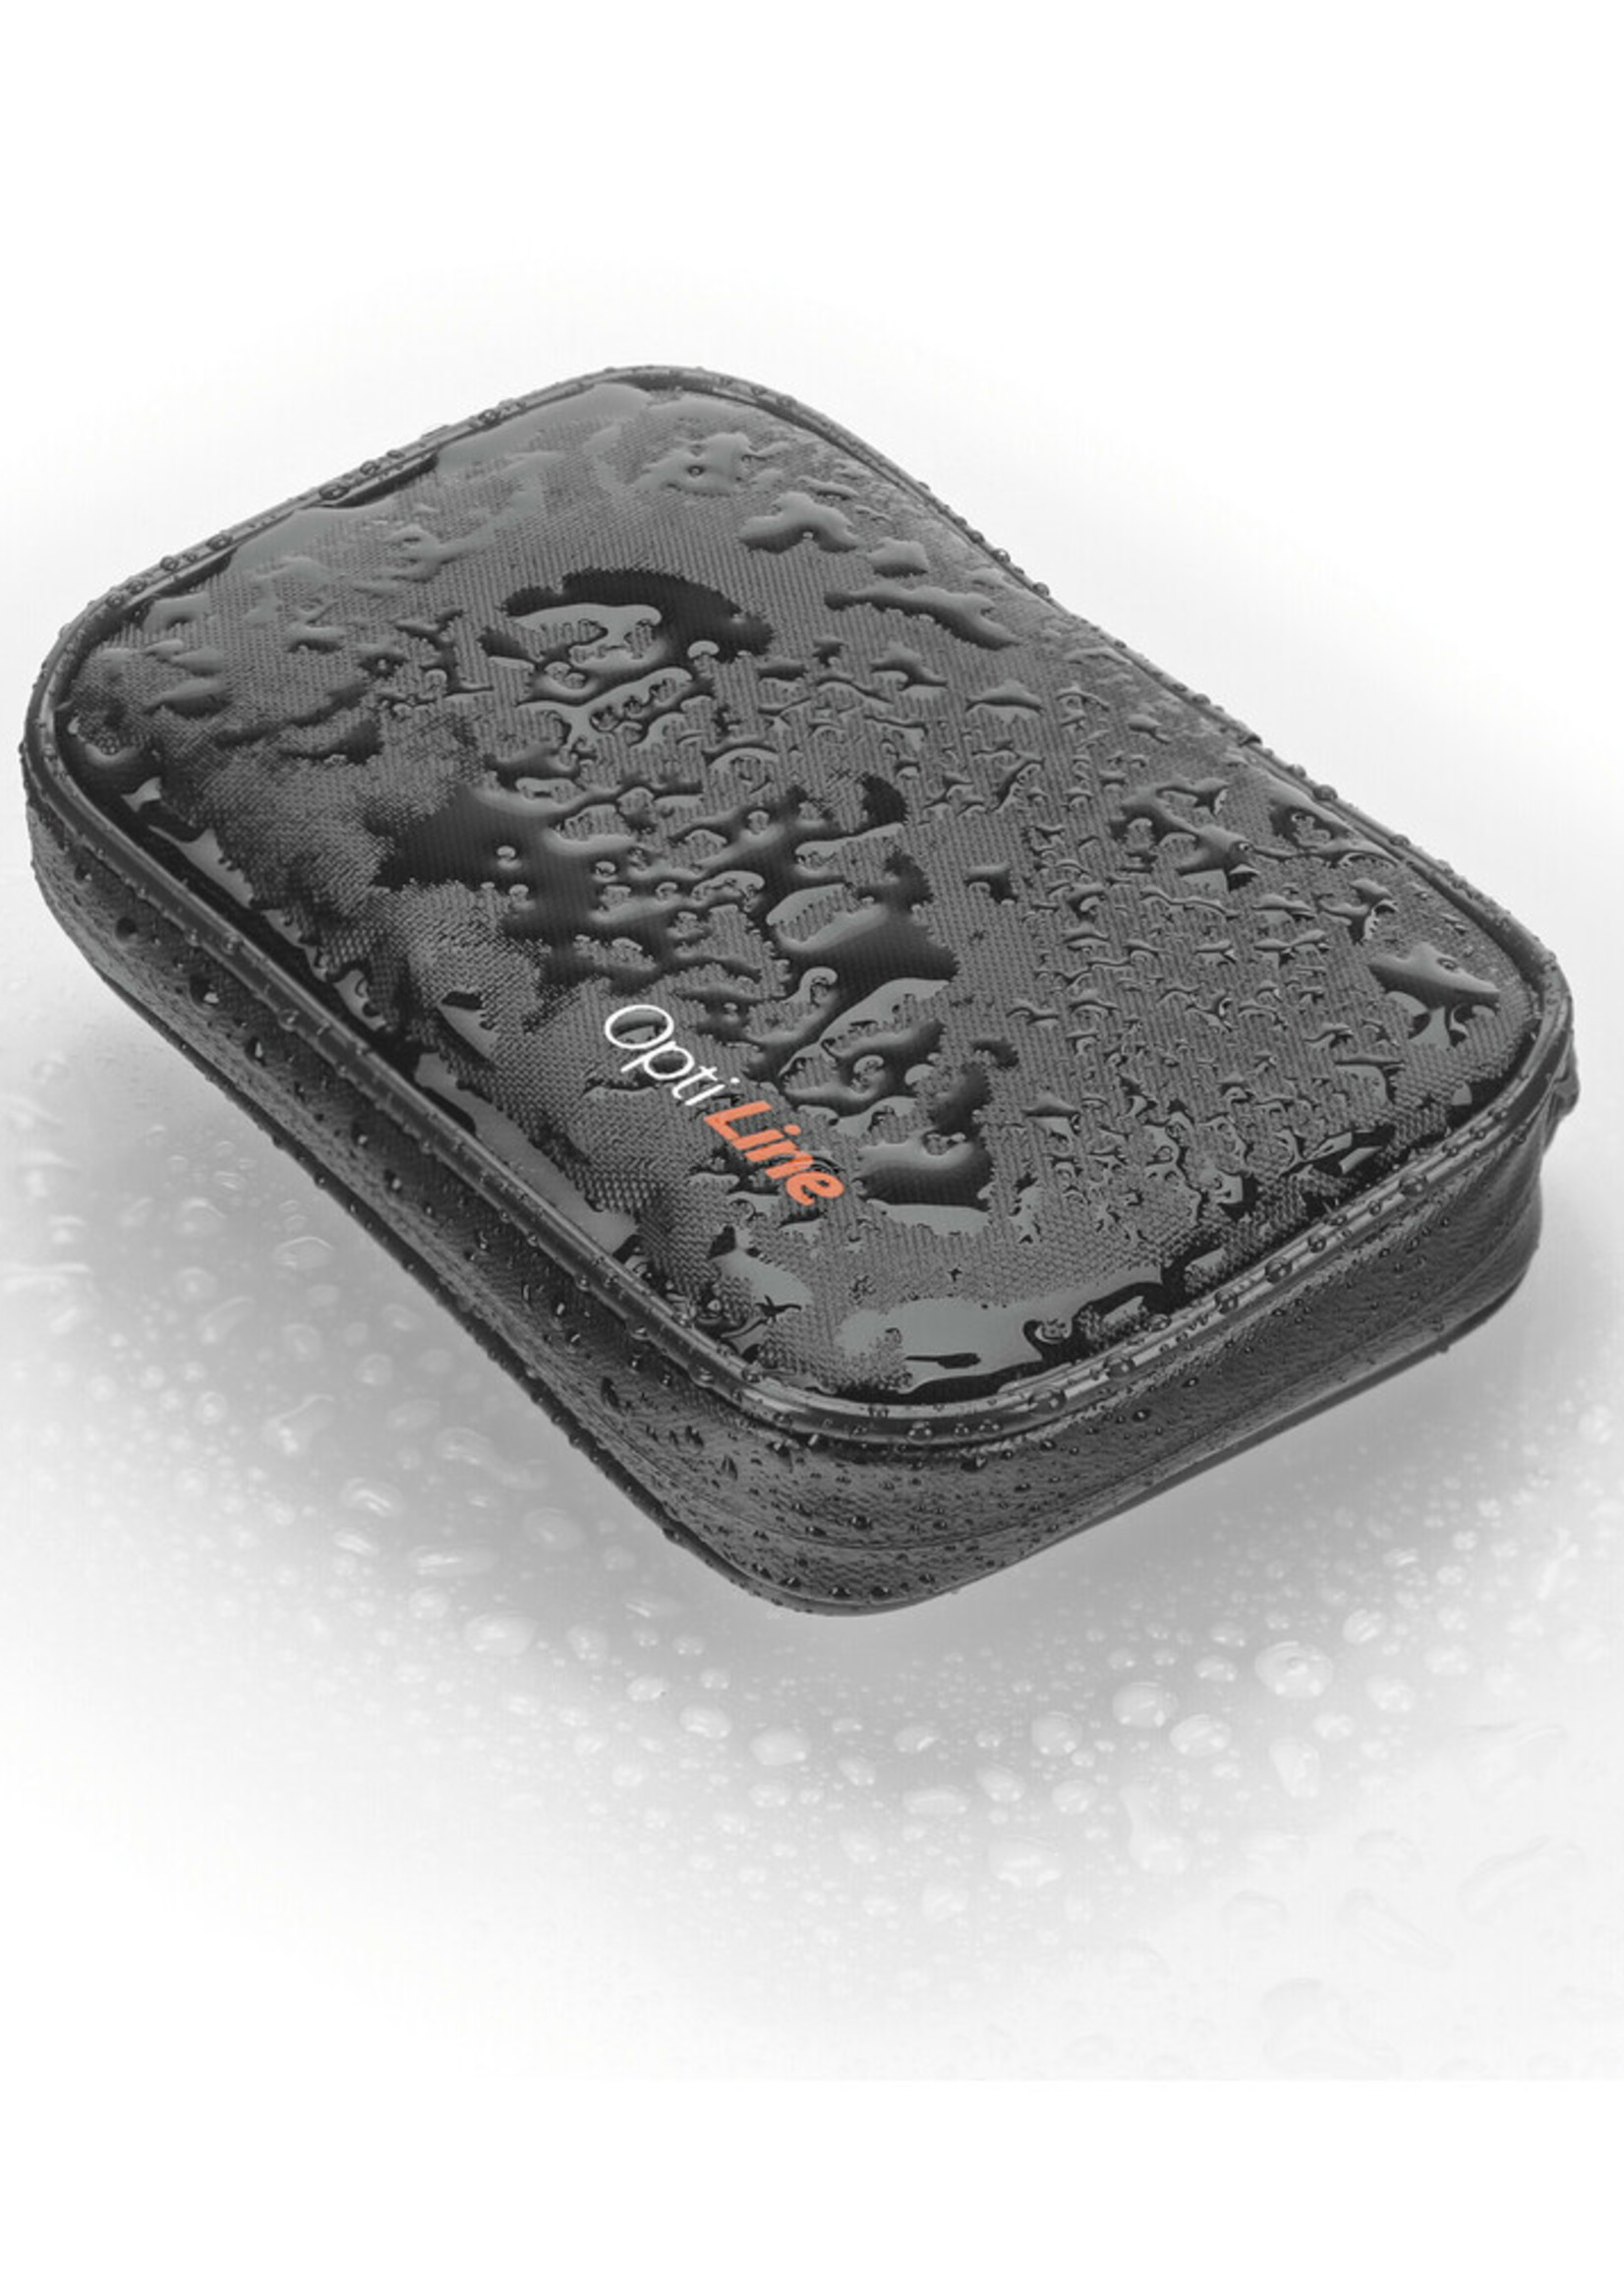 Optiline Opti-Wallet Wallet, rain resistant wallet